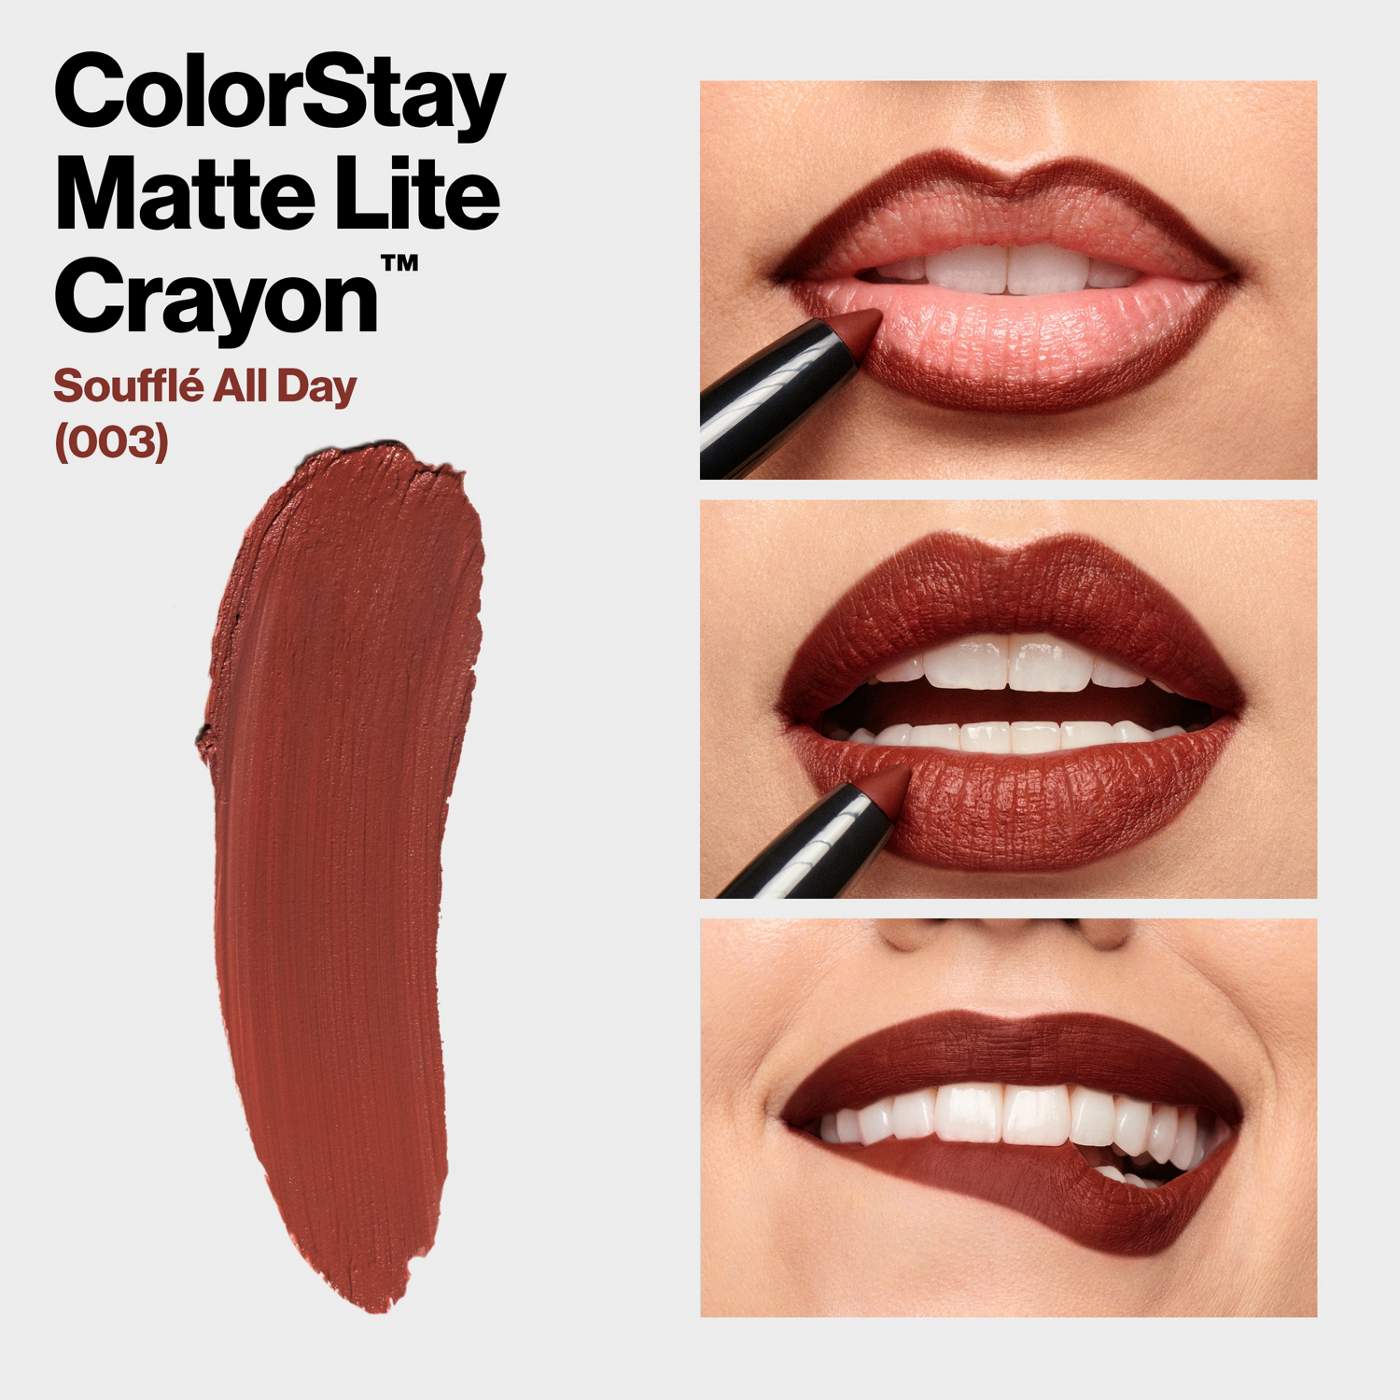 Revlon ColorStay Matte Lite Crayon Lipstick - Souffle All Day; image 4 of 7